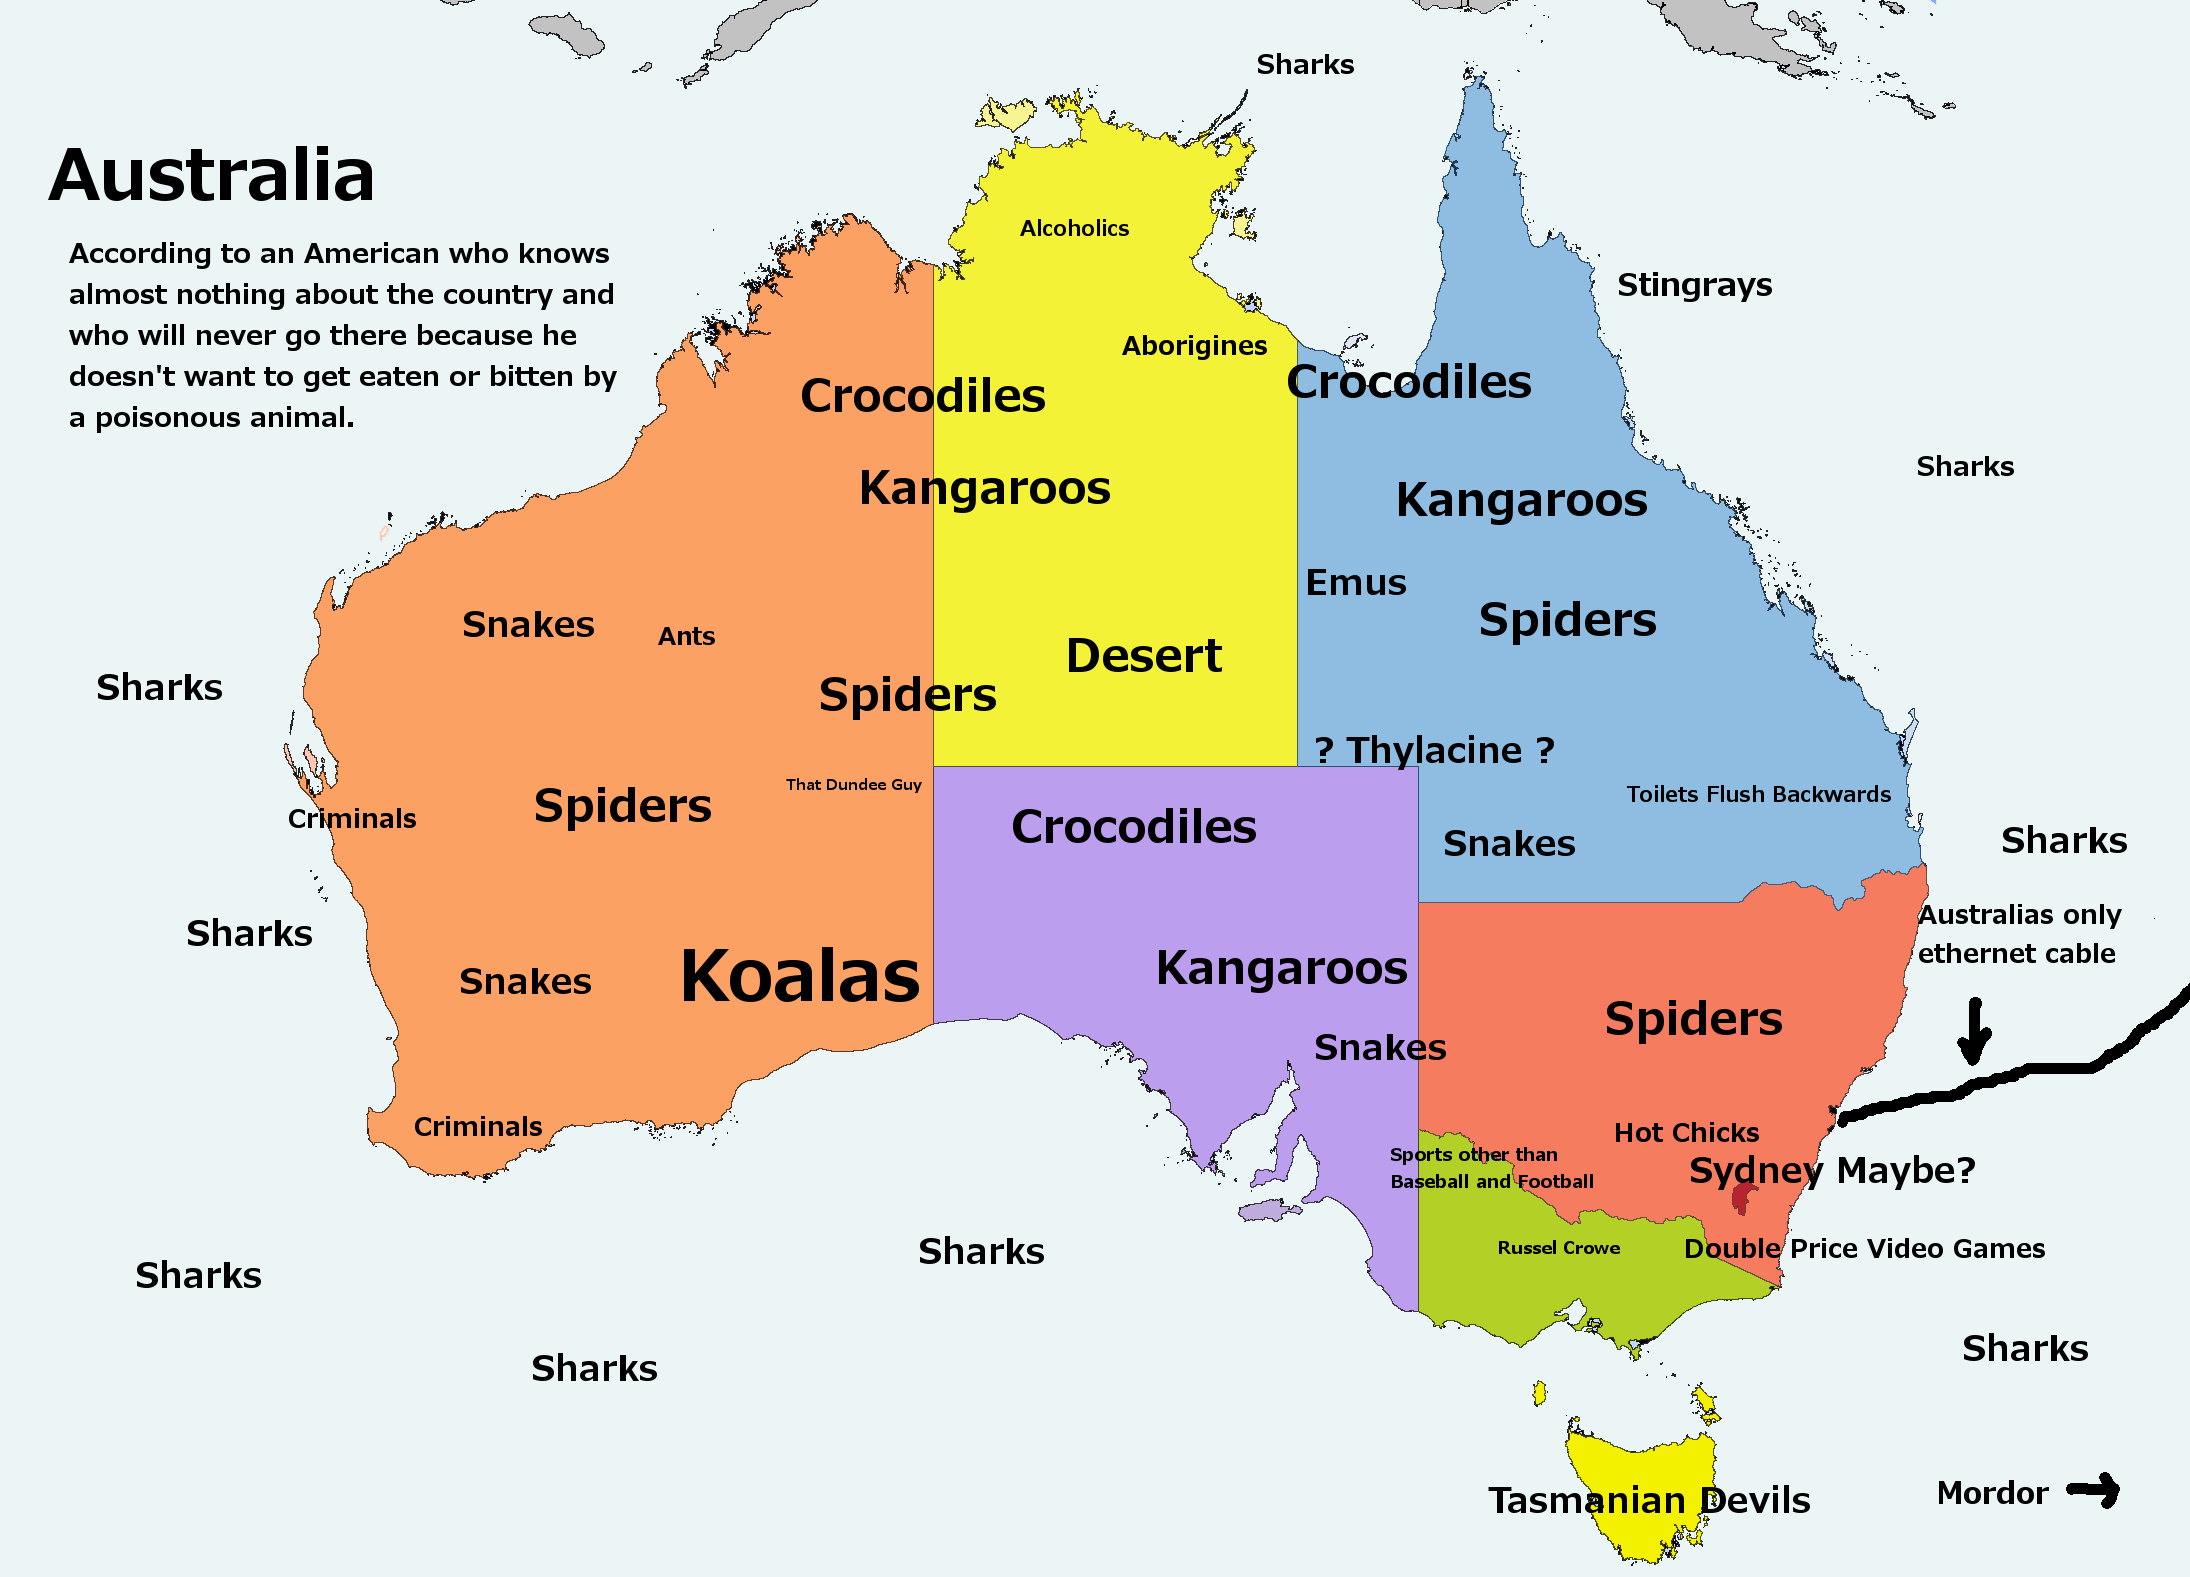 Australia According to an American